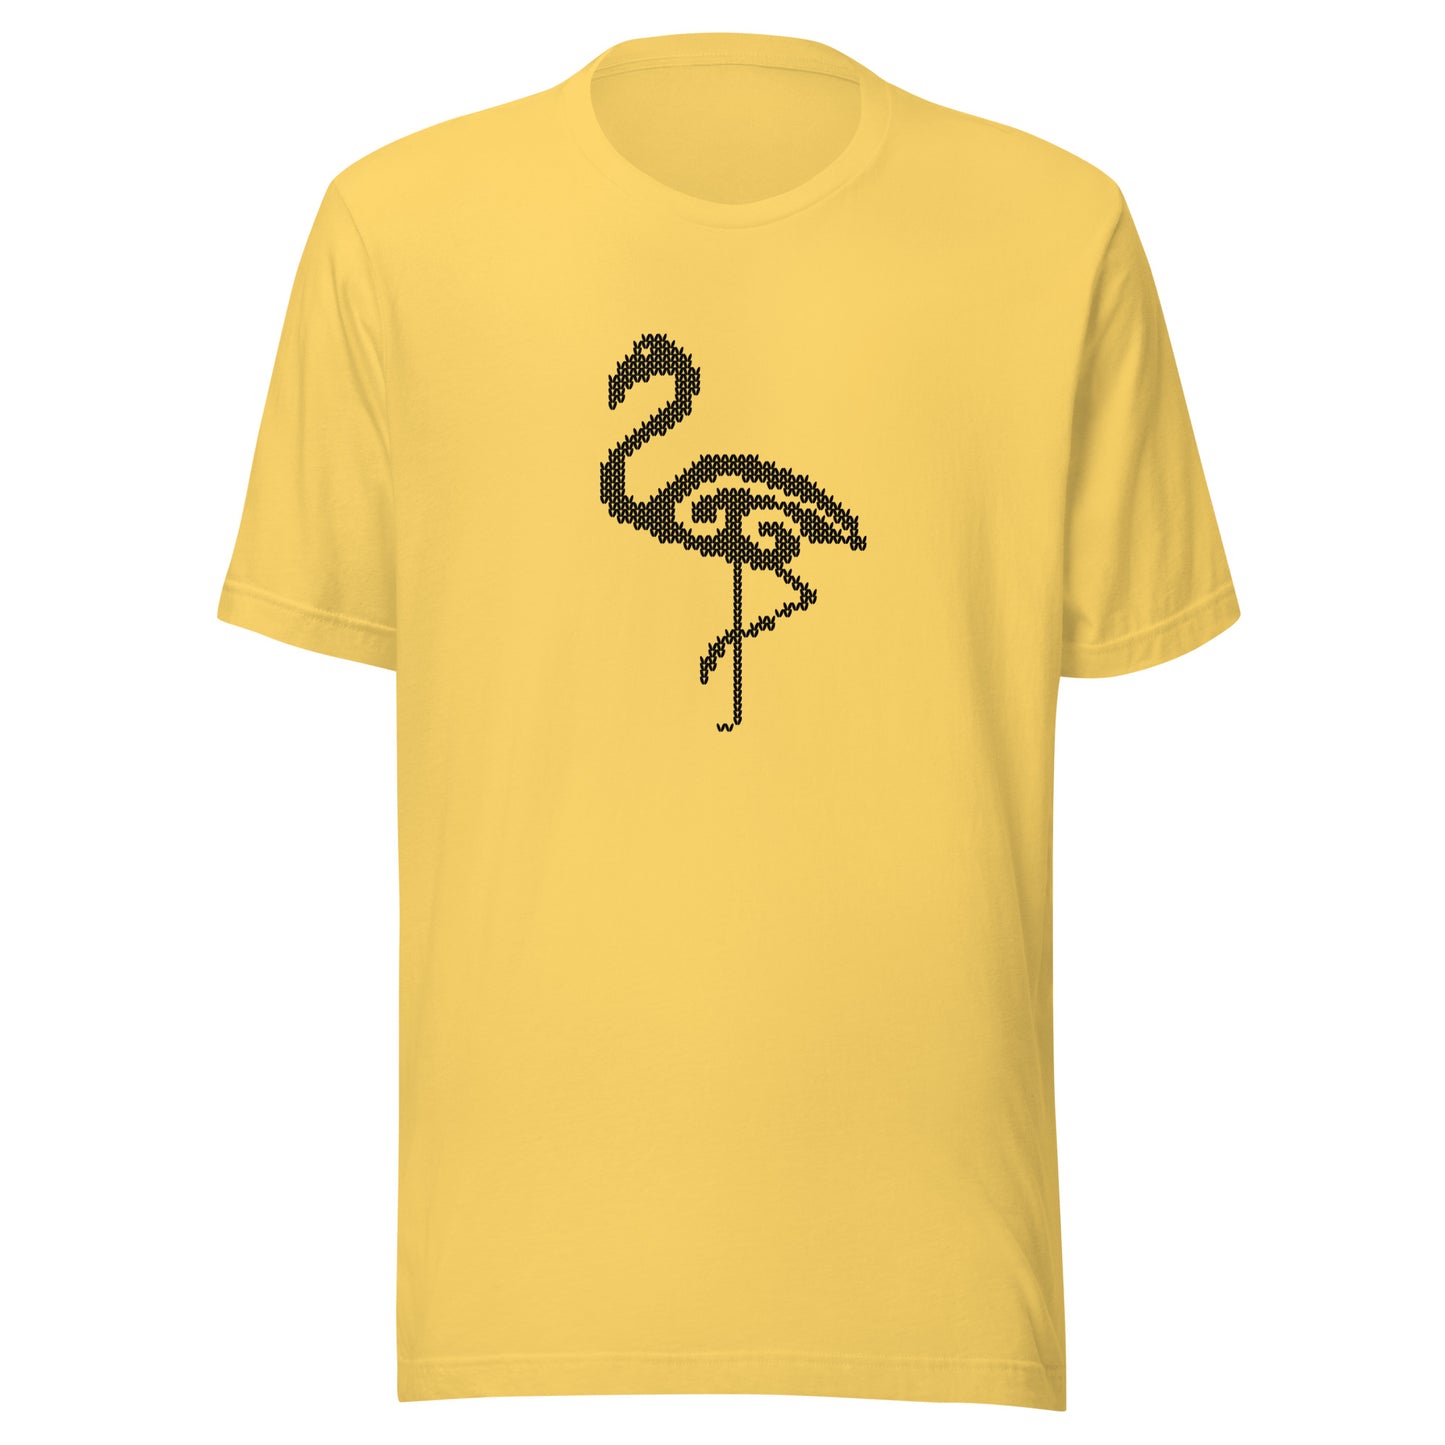 Sommer T-Shirt mit Flamingo